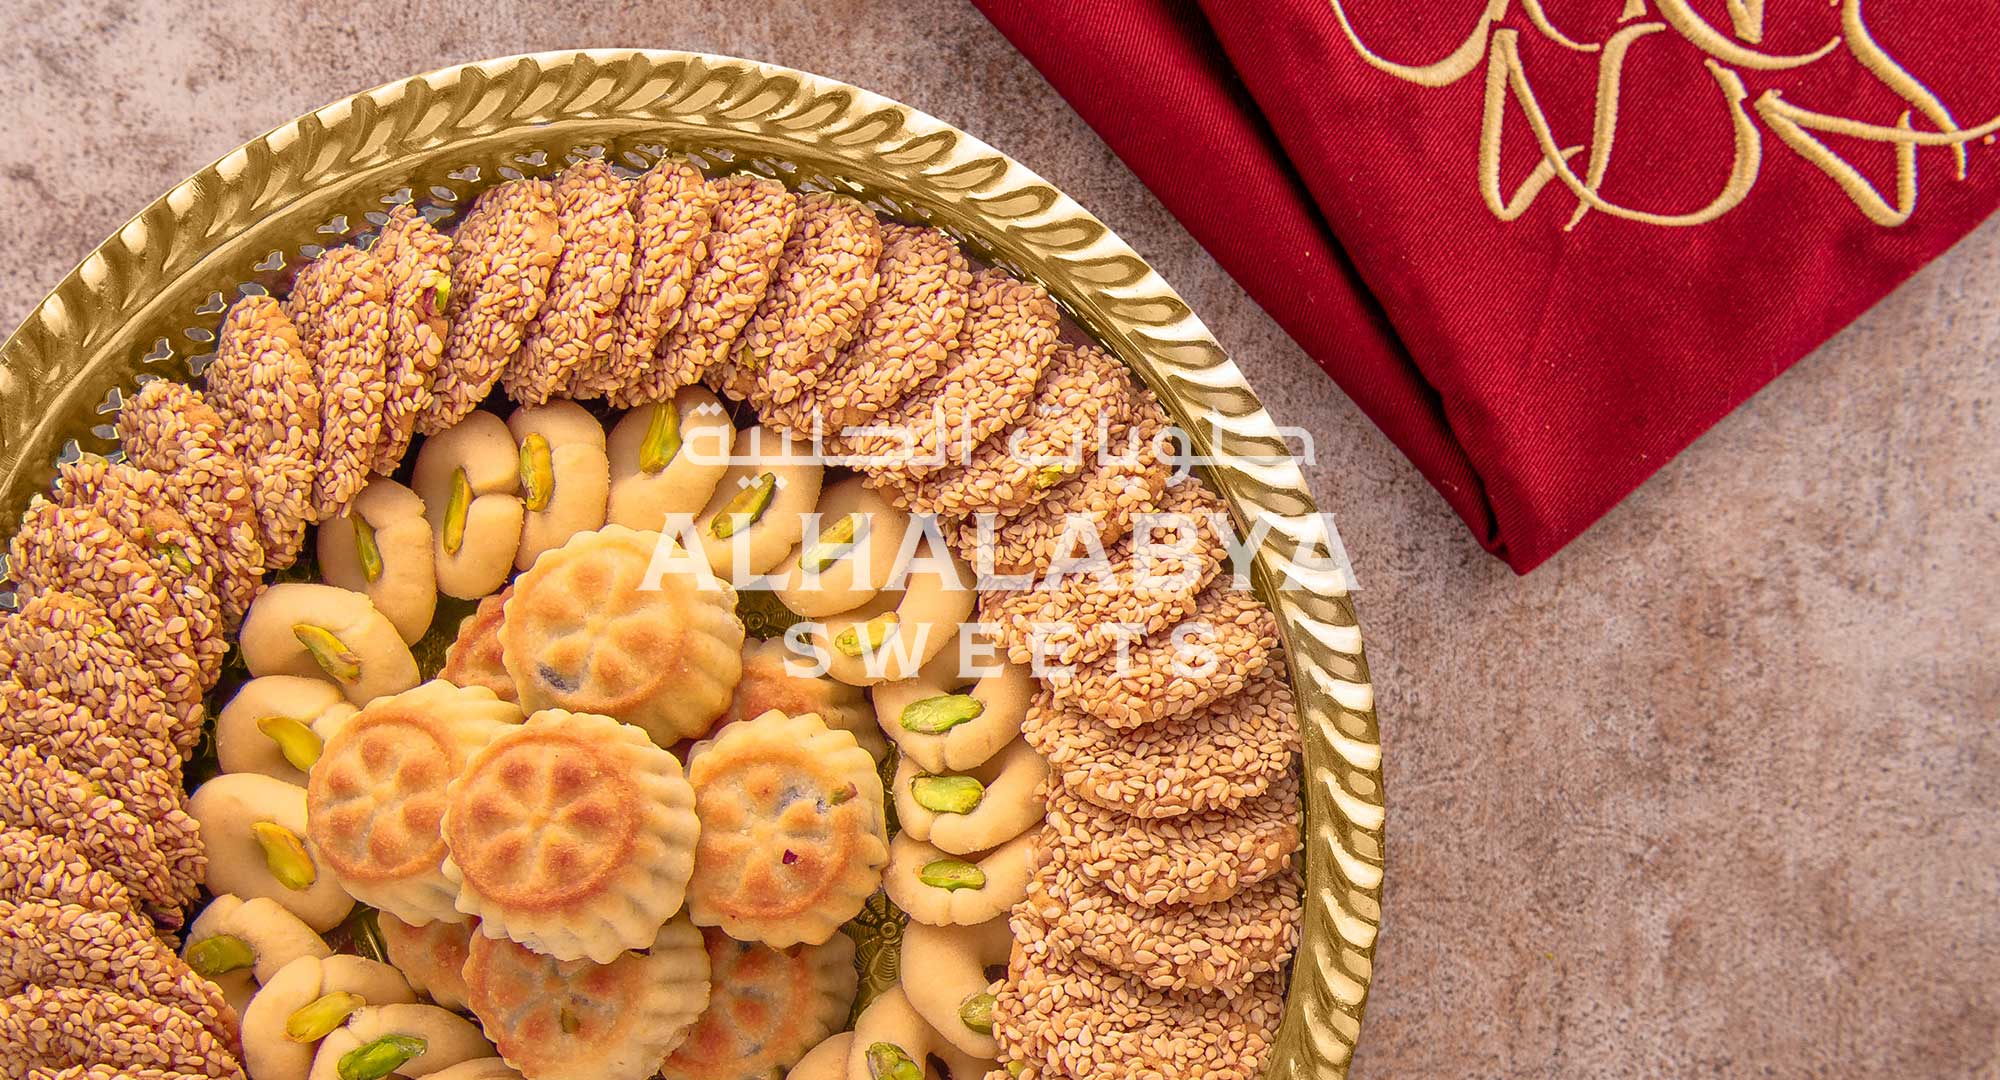 Al Halabya Sweets: The Heart of Authentic Arabic Nawashef in Sharjah